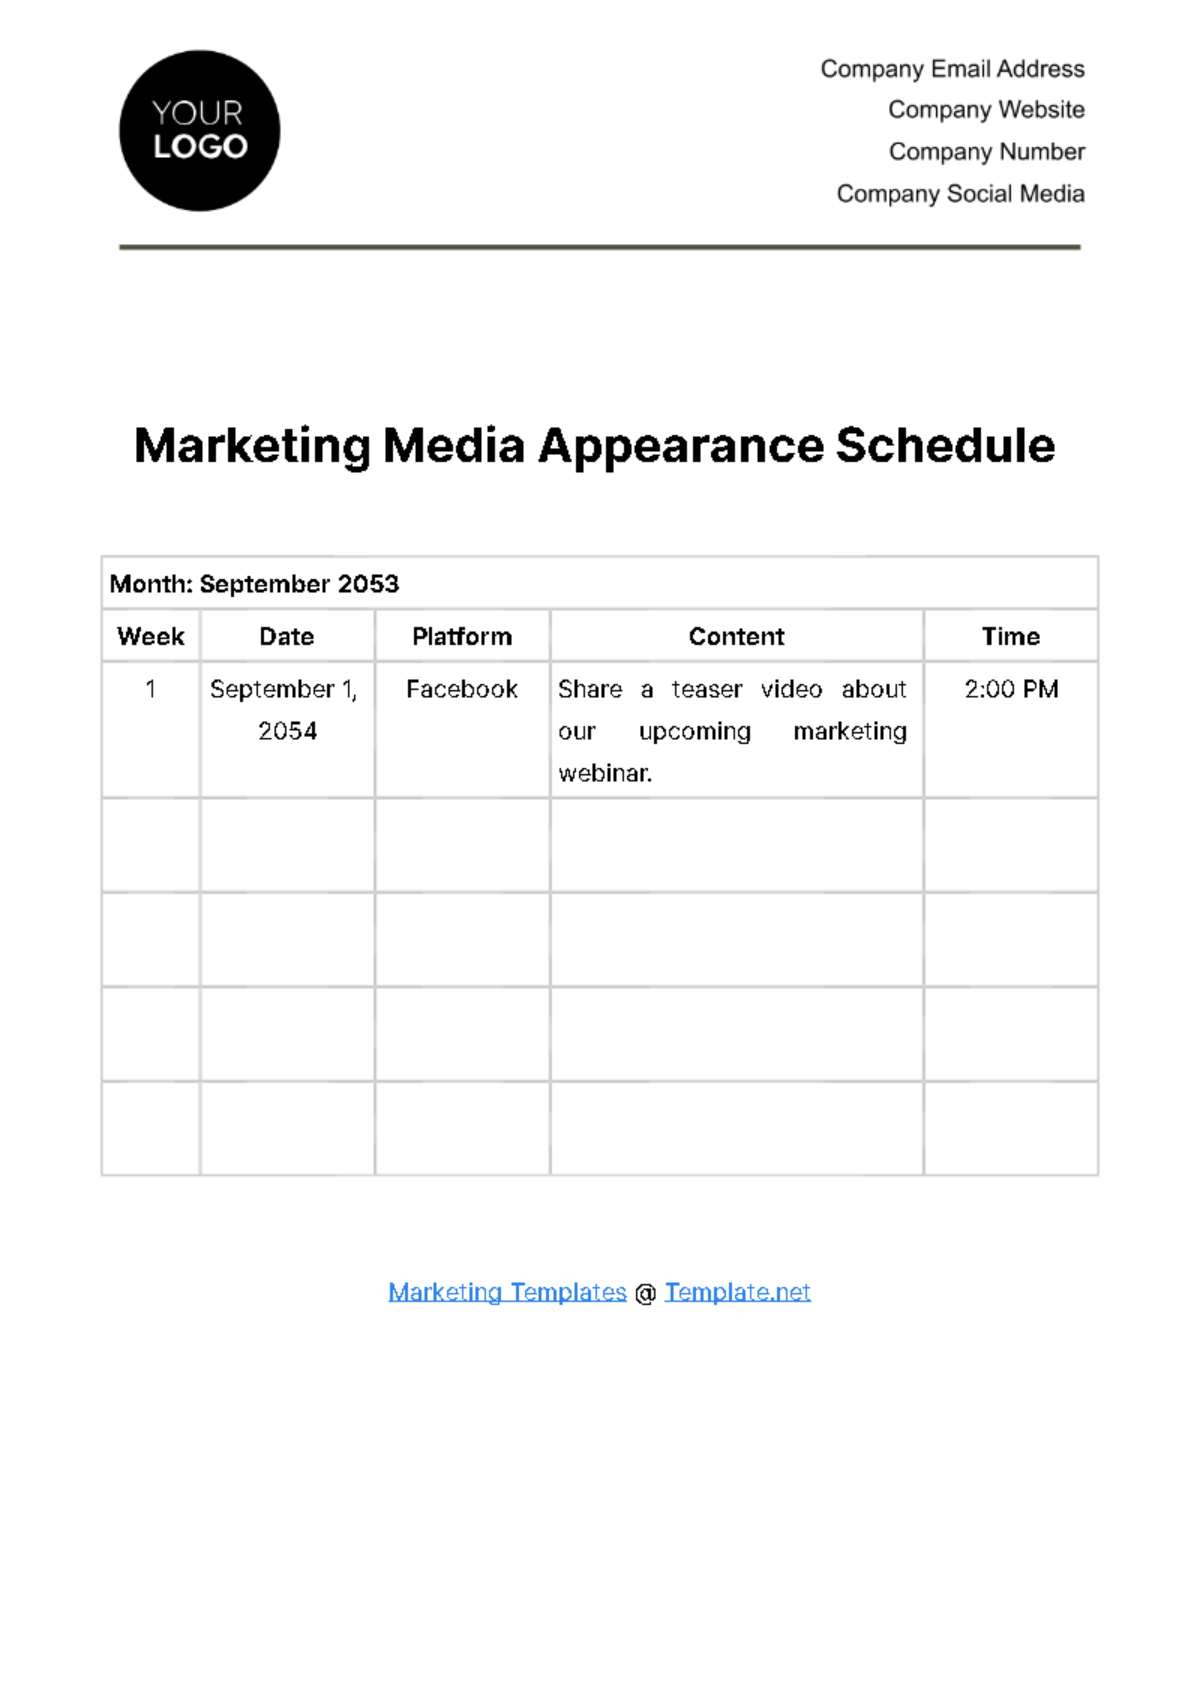 Marketing Media Appearance Schedule Template